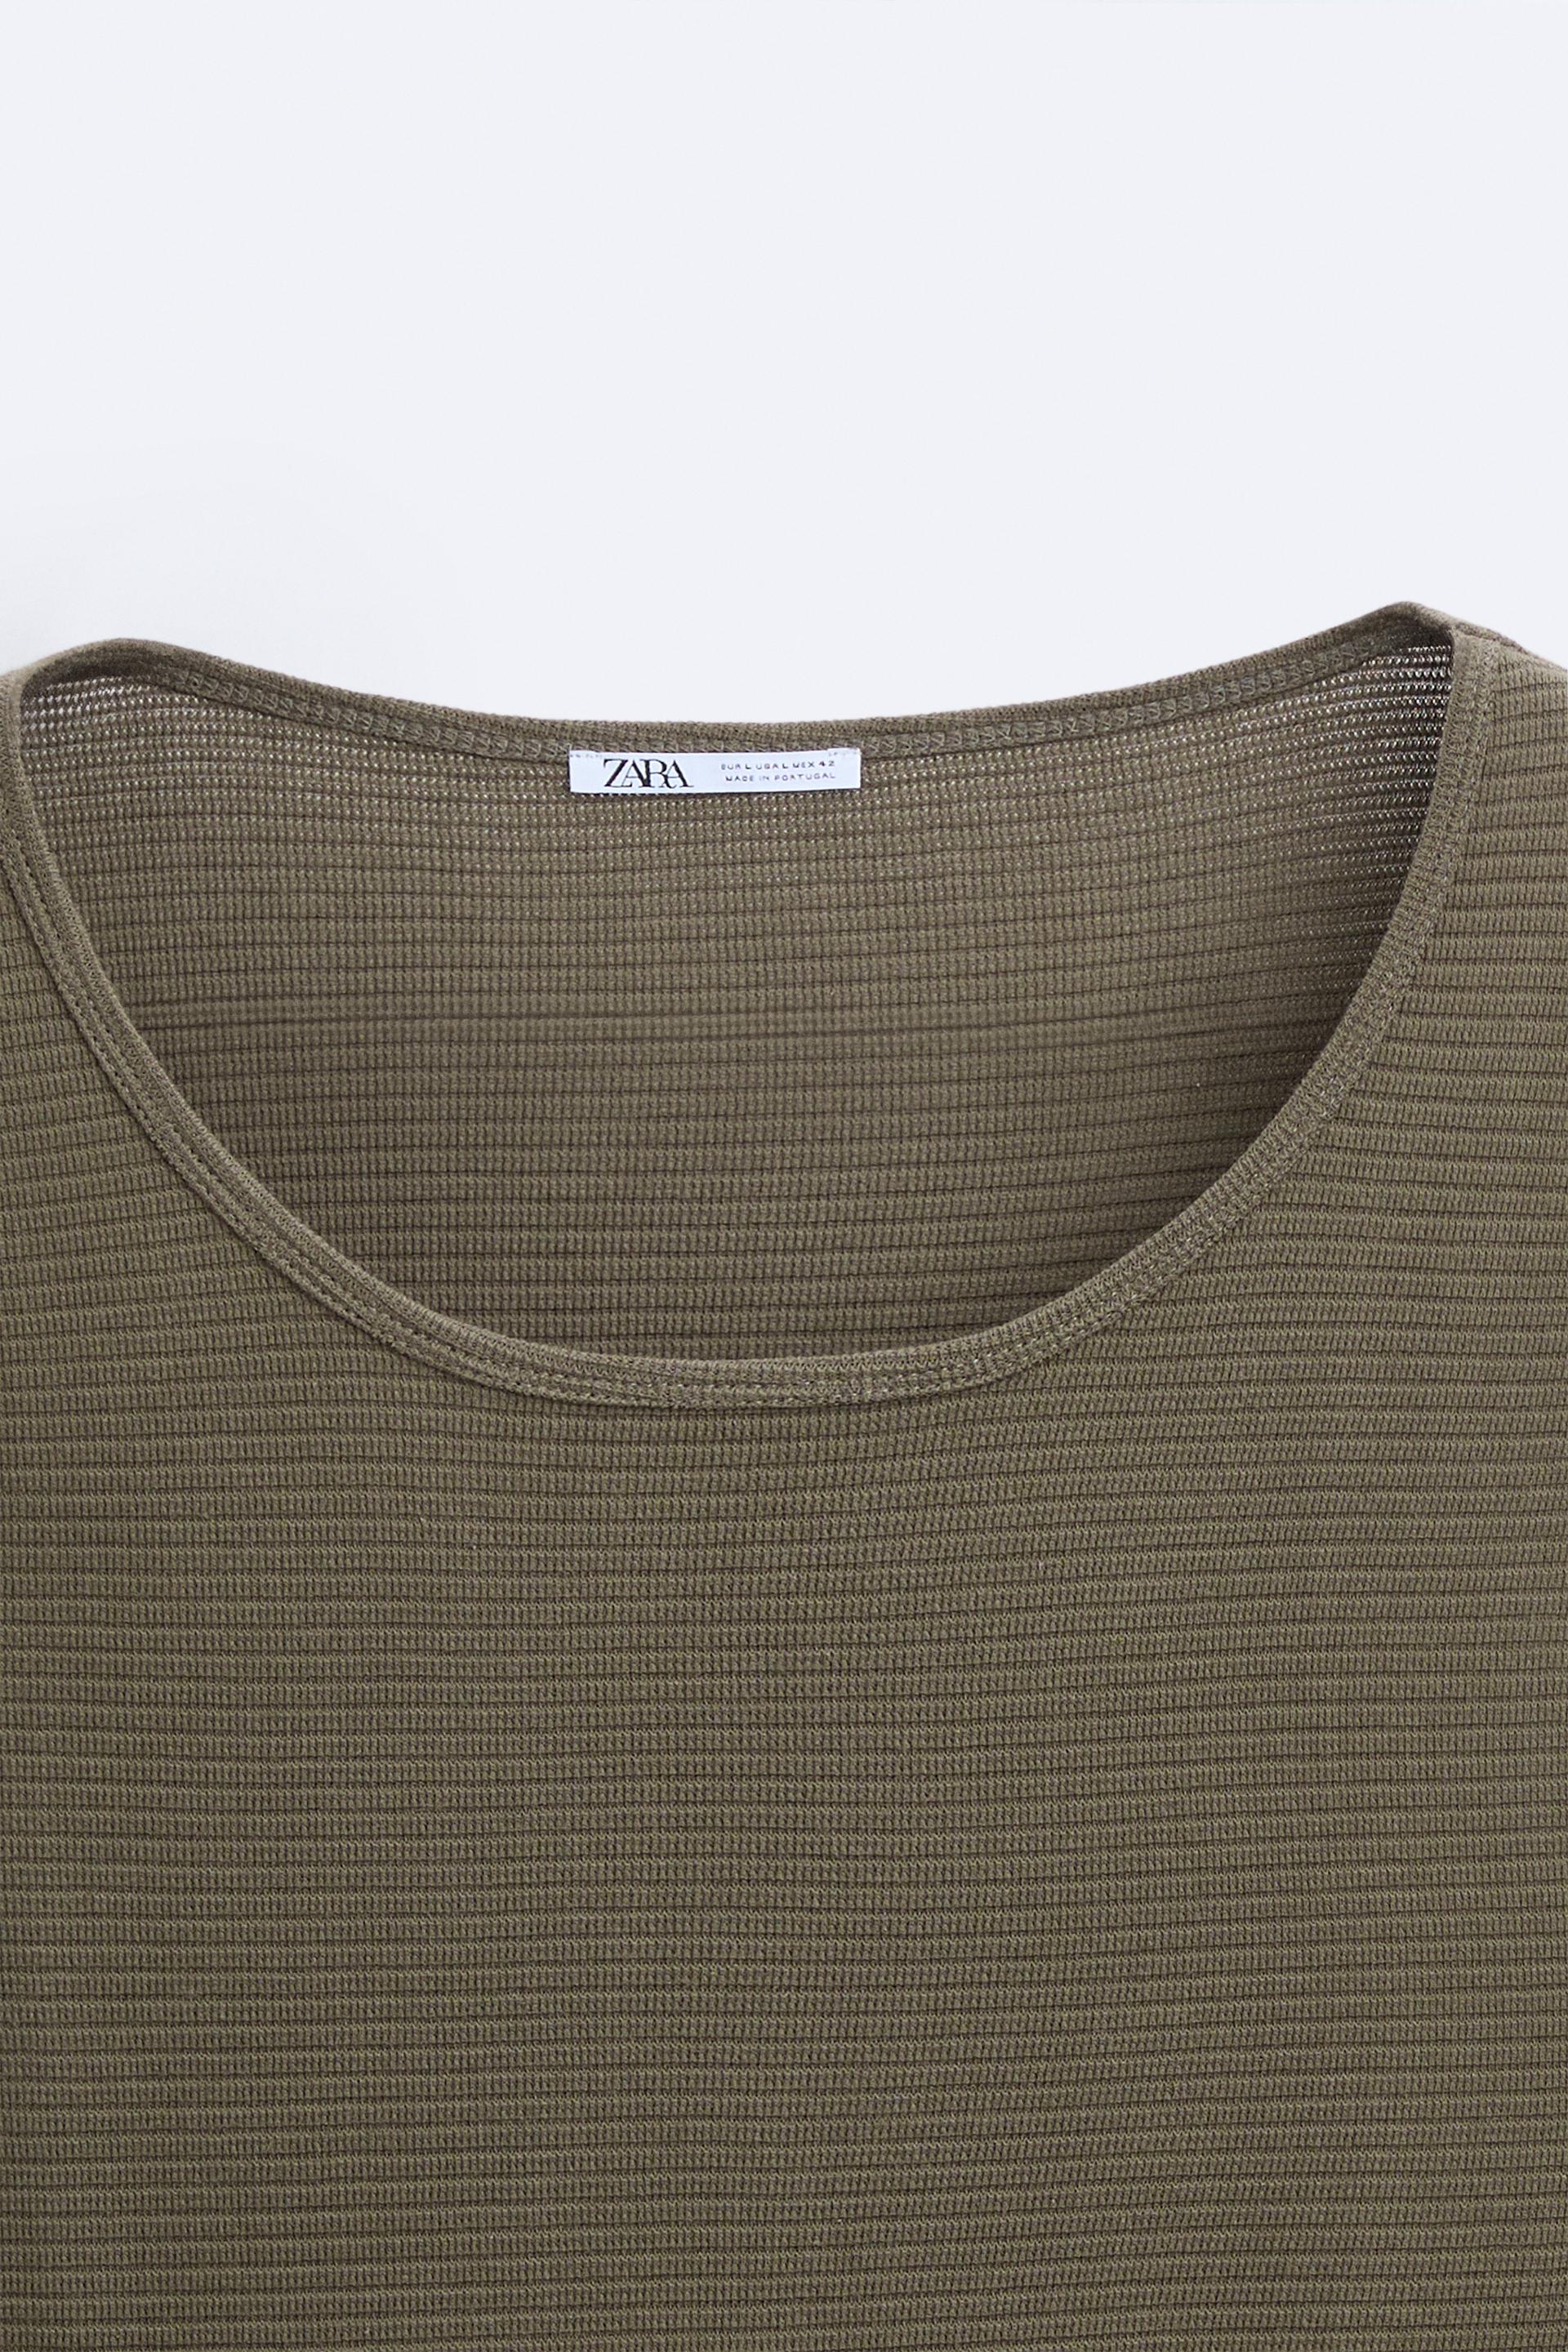 Zara Women's Sleeveless Top Medium Tan Stretchy Body Hugging Cami Tank  Shirt P14